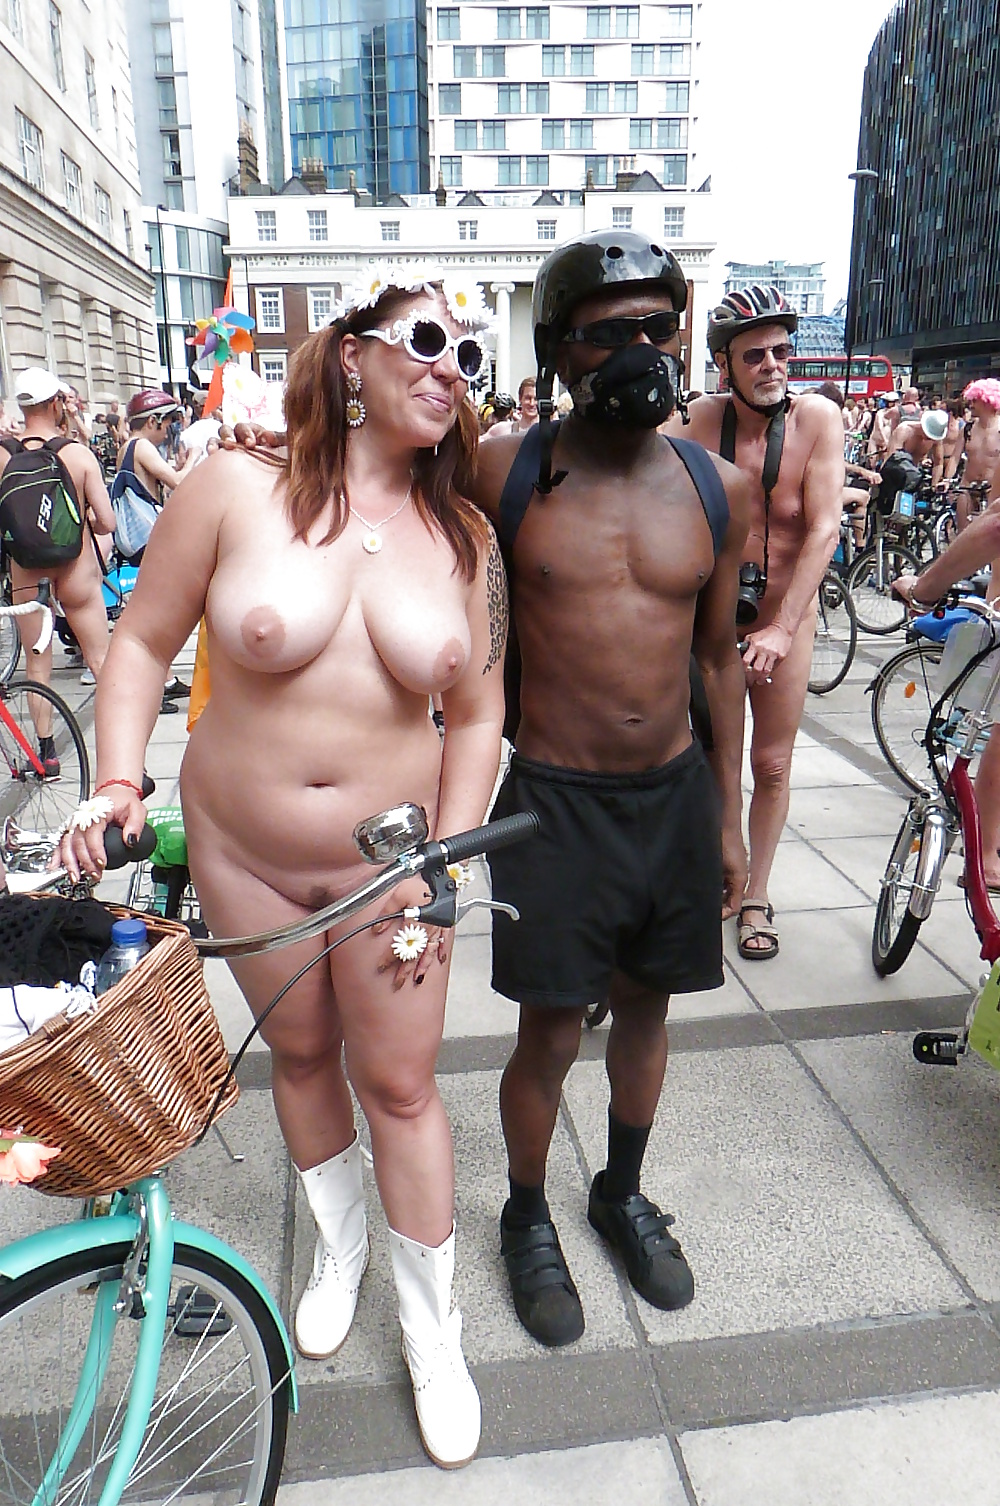 Sex World Naked Bike Ride London 2014 image